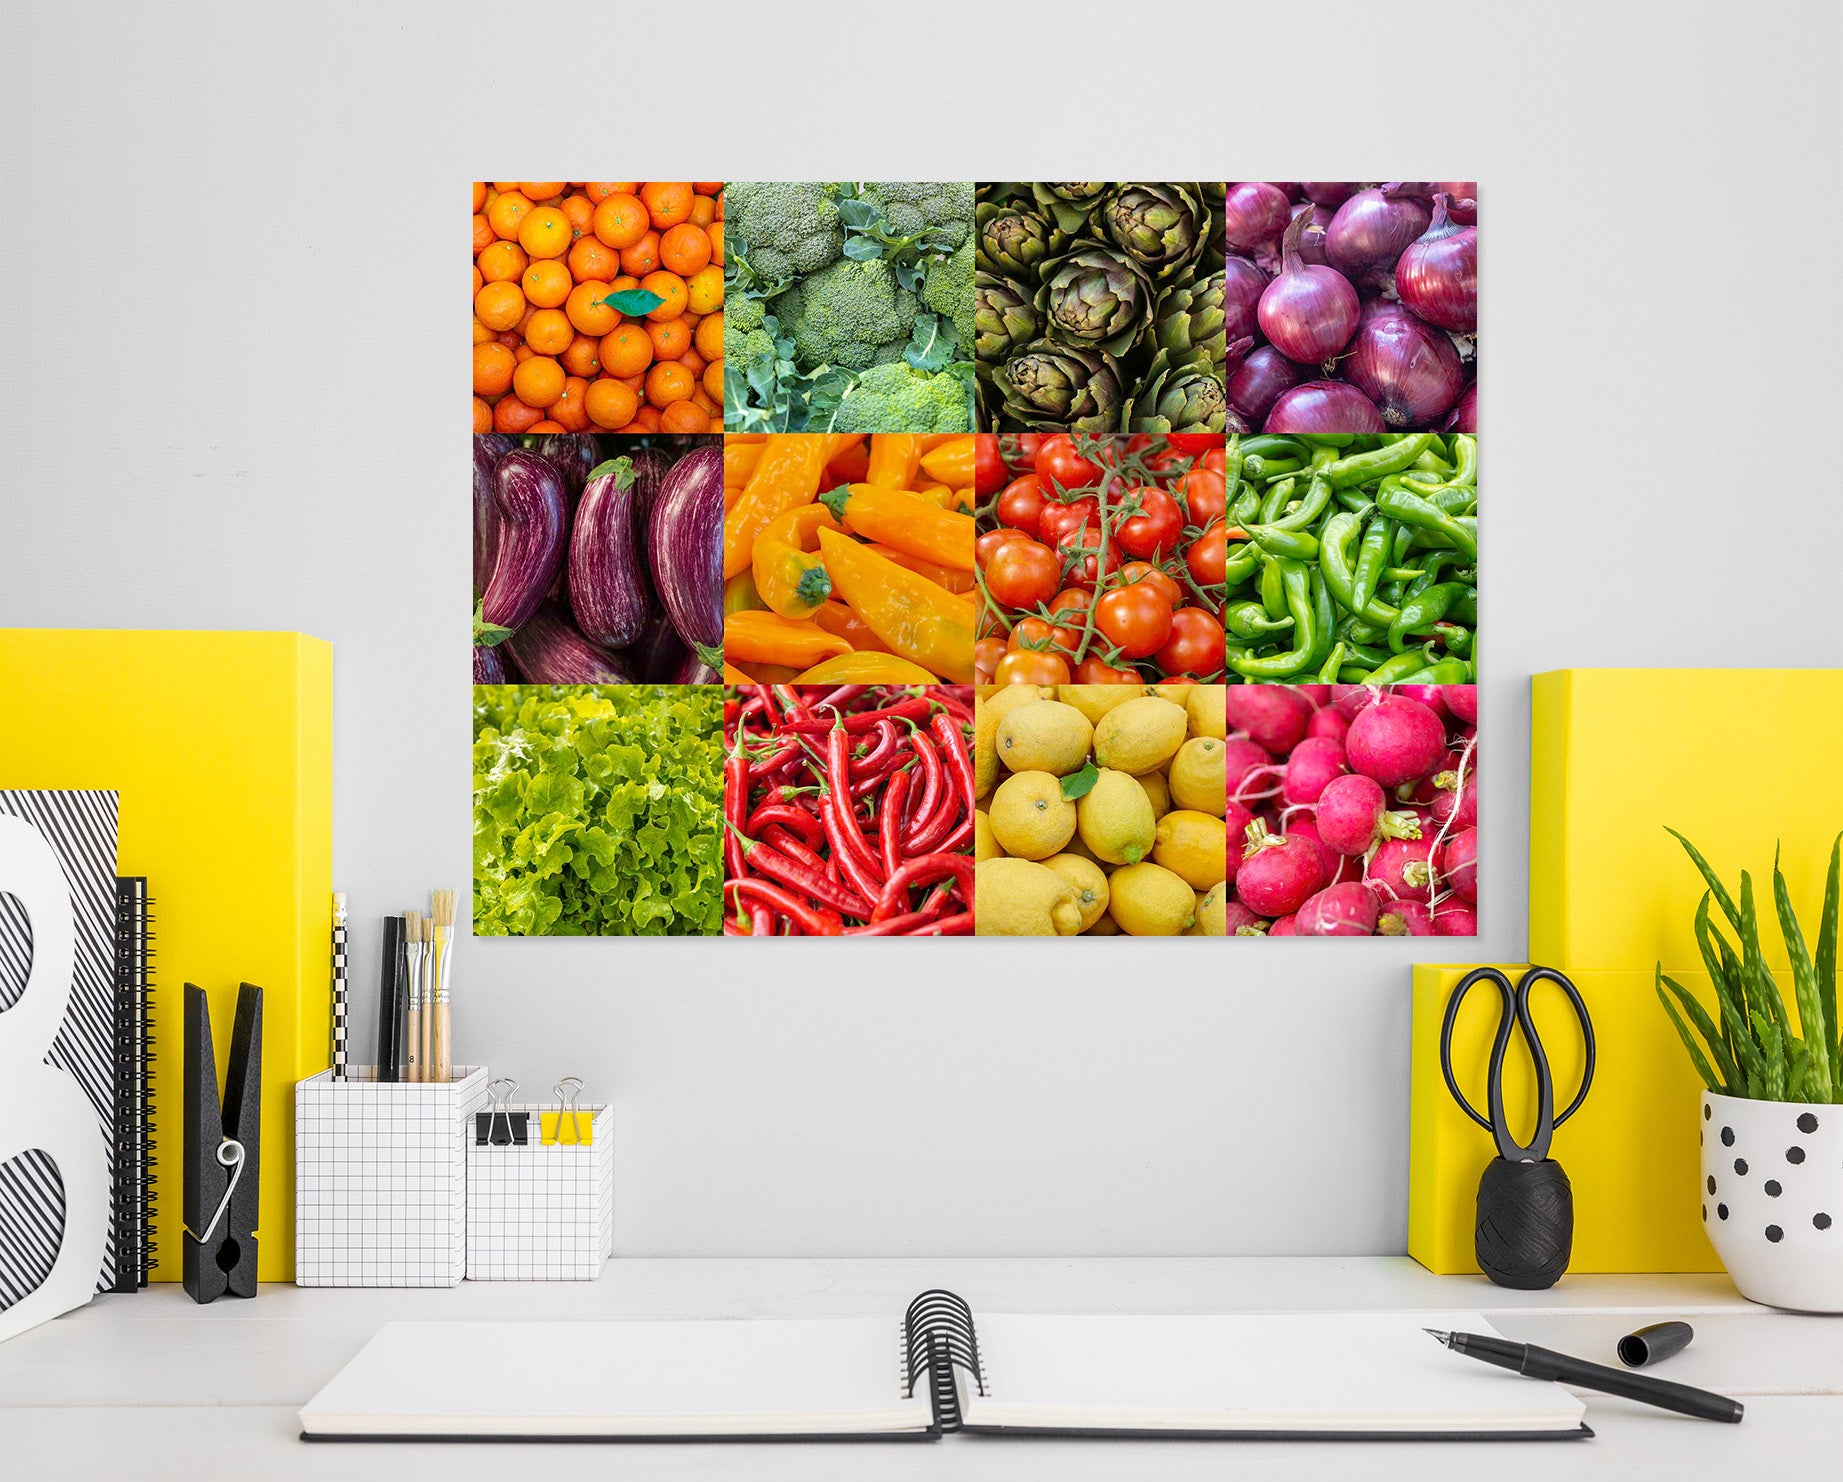 3D Fresh Fruits And Vegetables 033 Assaf Frank Wall Sticker